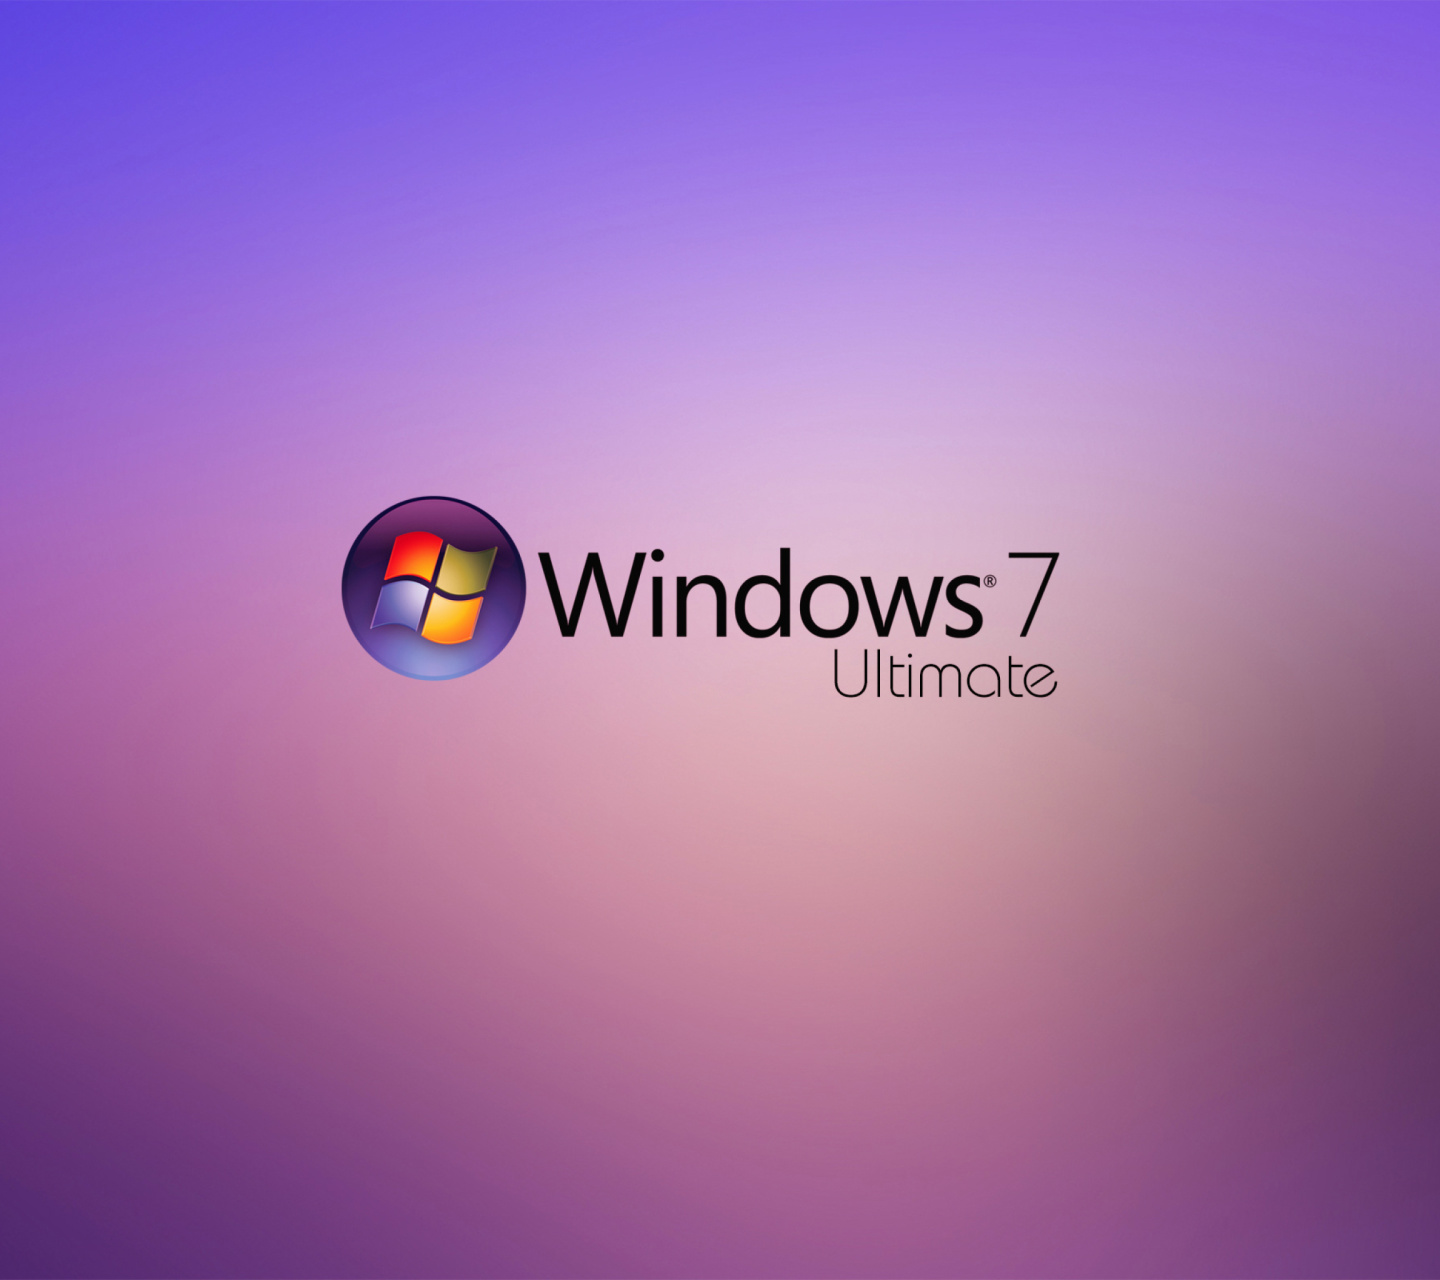 Windows 7 Ultimate wallpaper 1440x1280